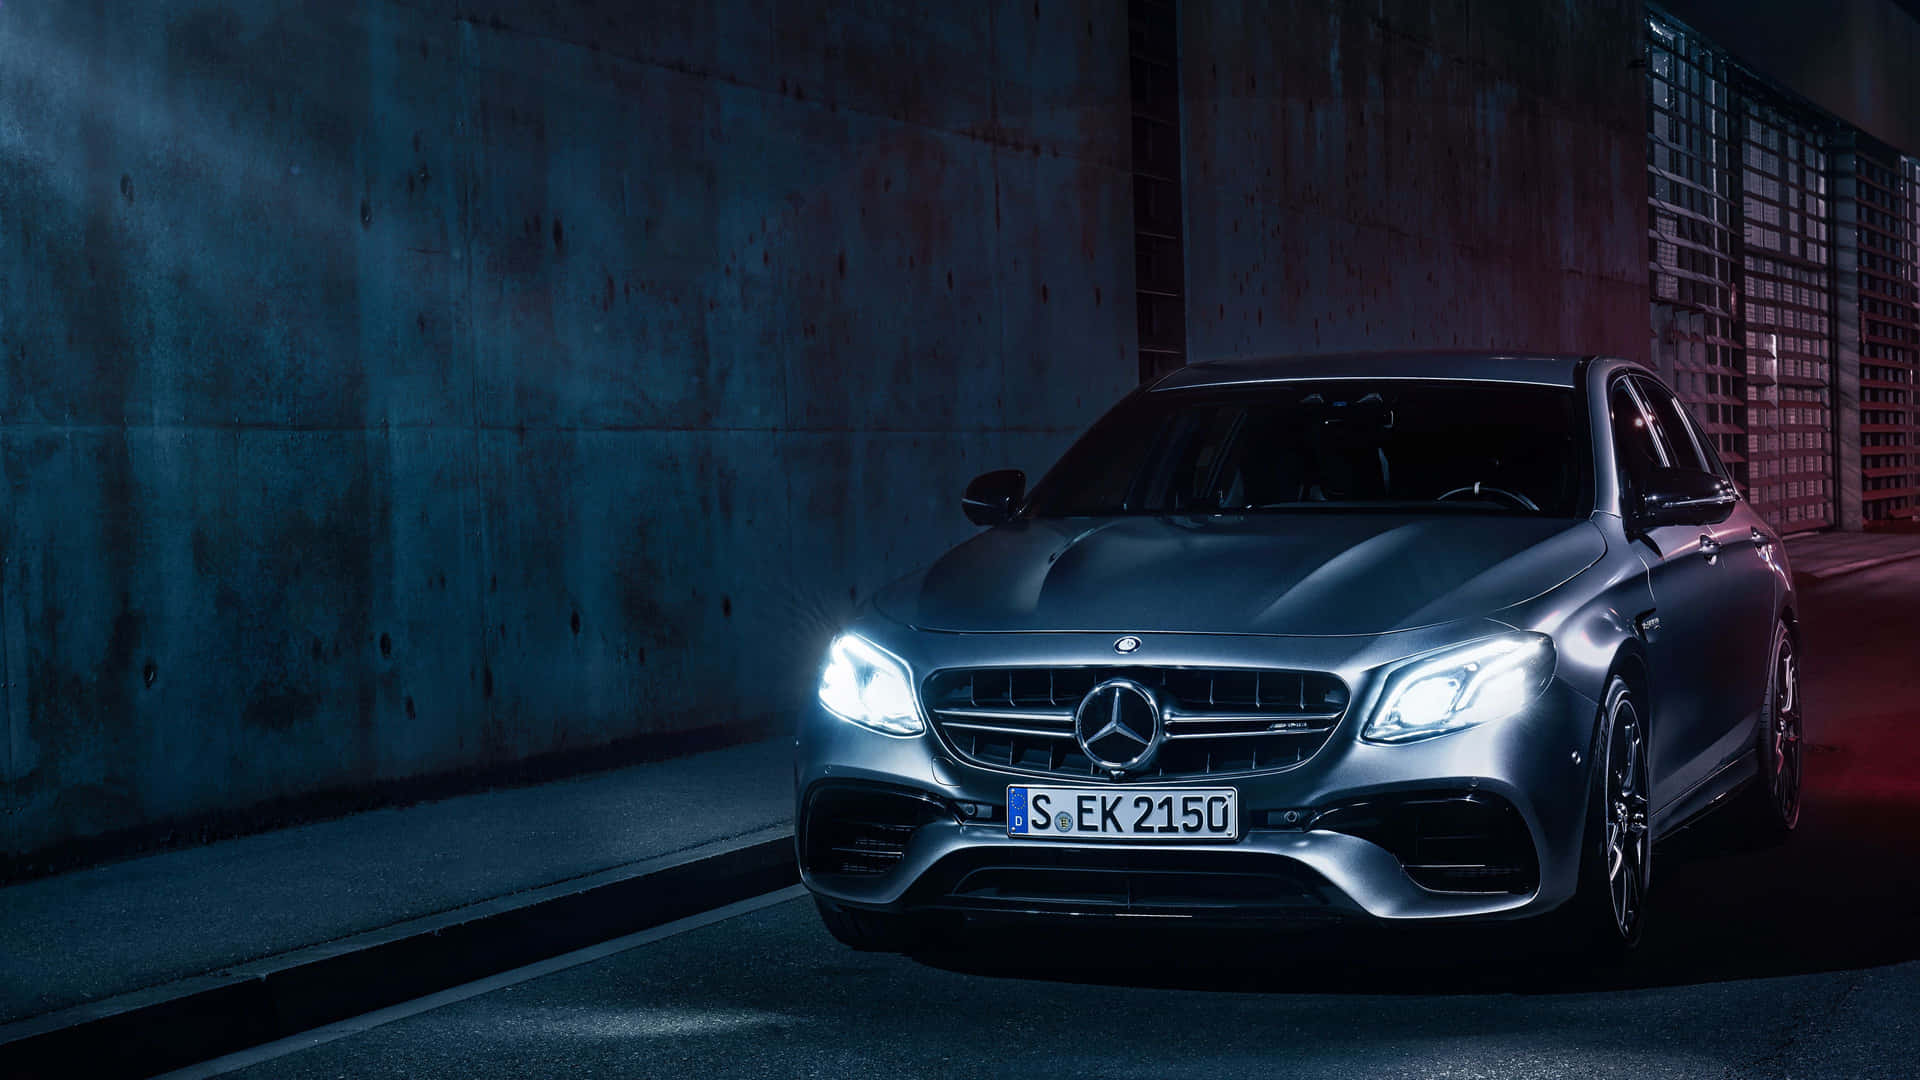 The sleek and stylish Mercedes Car 4k Wallpaper